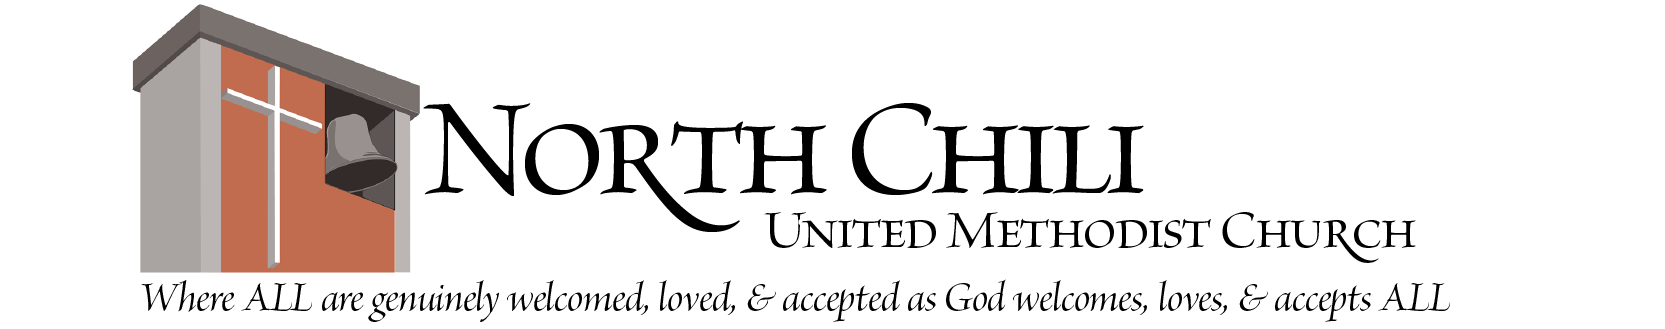 North Chili United Methodist Church